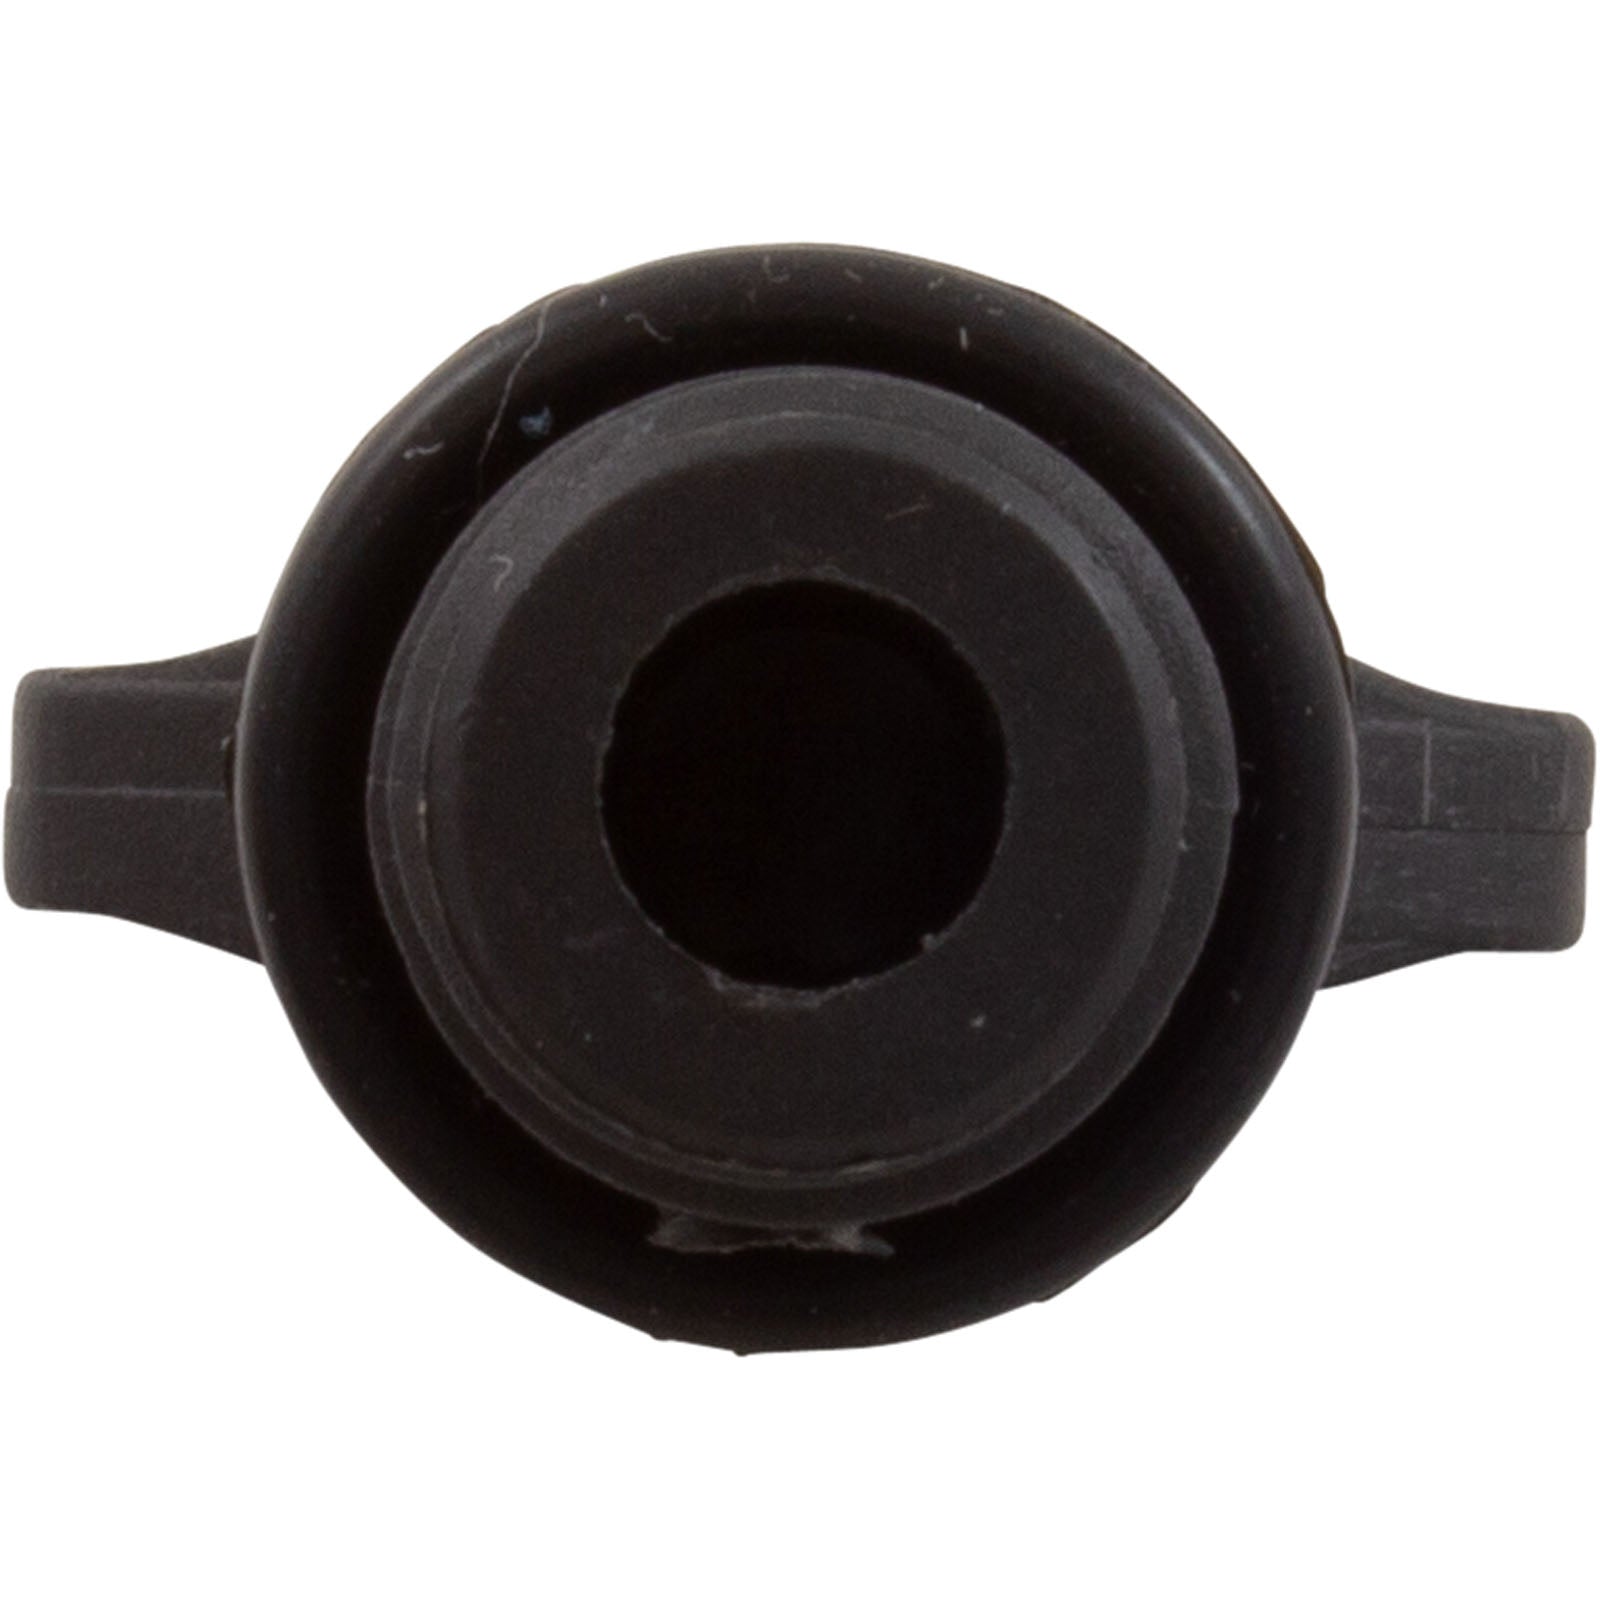 Drain Plug with O-ring, Raypak 018231F